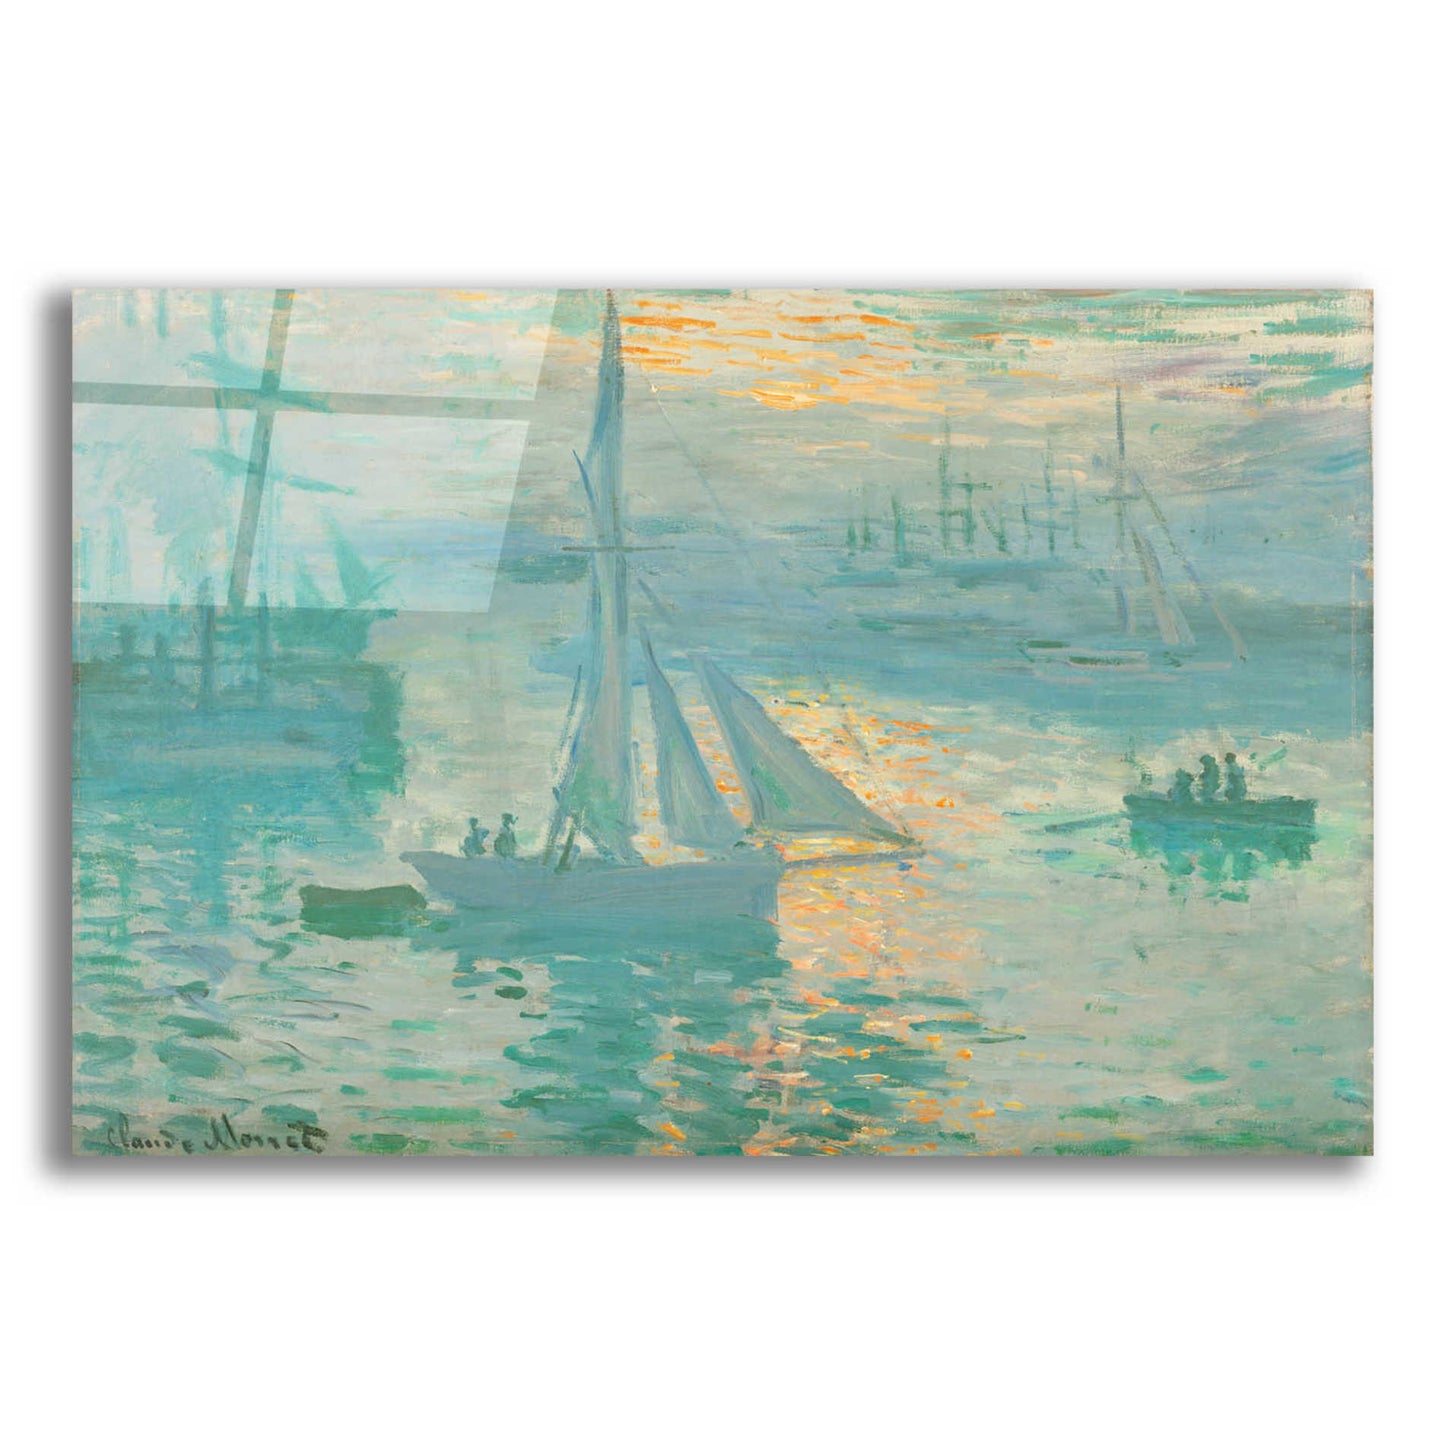 Epic Art 'Sunrise' by Claude Monet, Acrylic Glass Wall Art,16x12x1.1x0,24x20x1.1x0,30x26x1.74x0,54x40x1.74x0